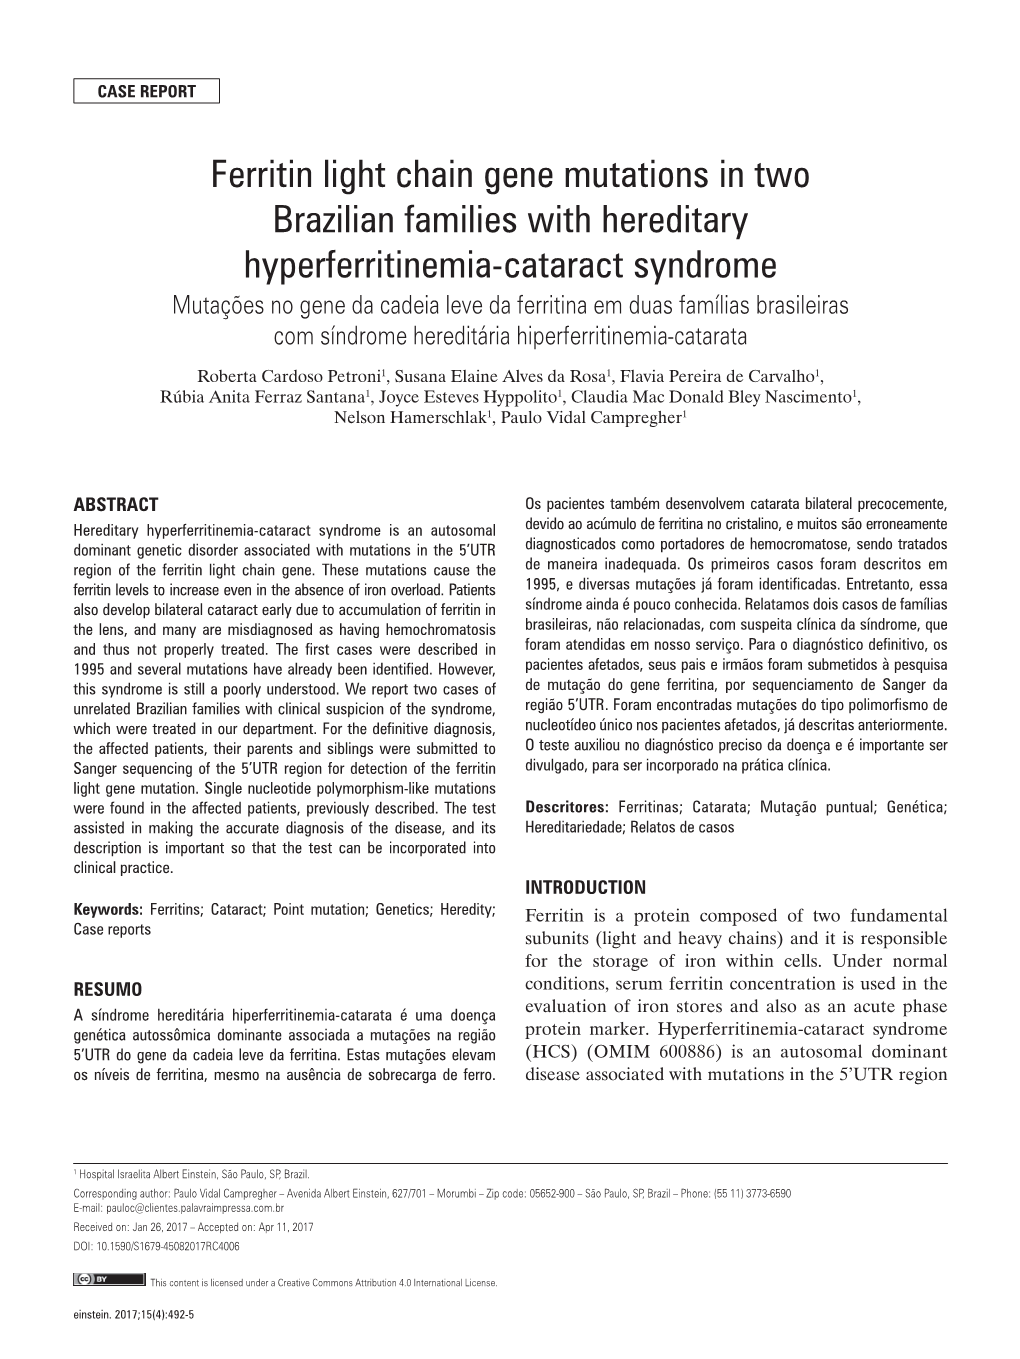 Ferritin Light Chain Gene Mutations in Two Brazilian Families with Hereditary Hyperferritinemia-Cataract Syndrome